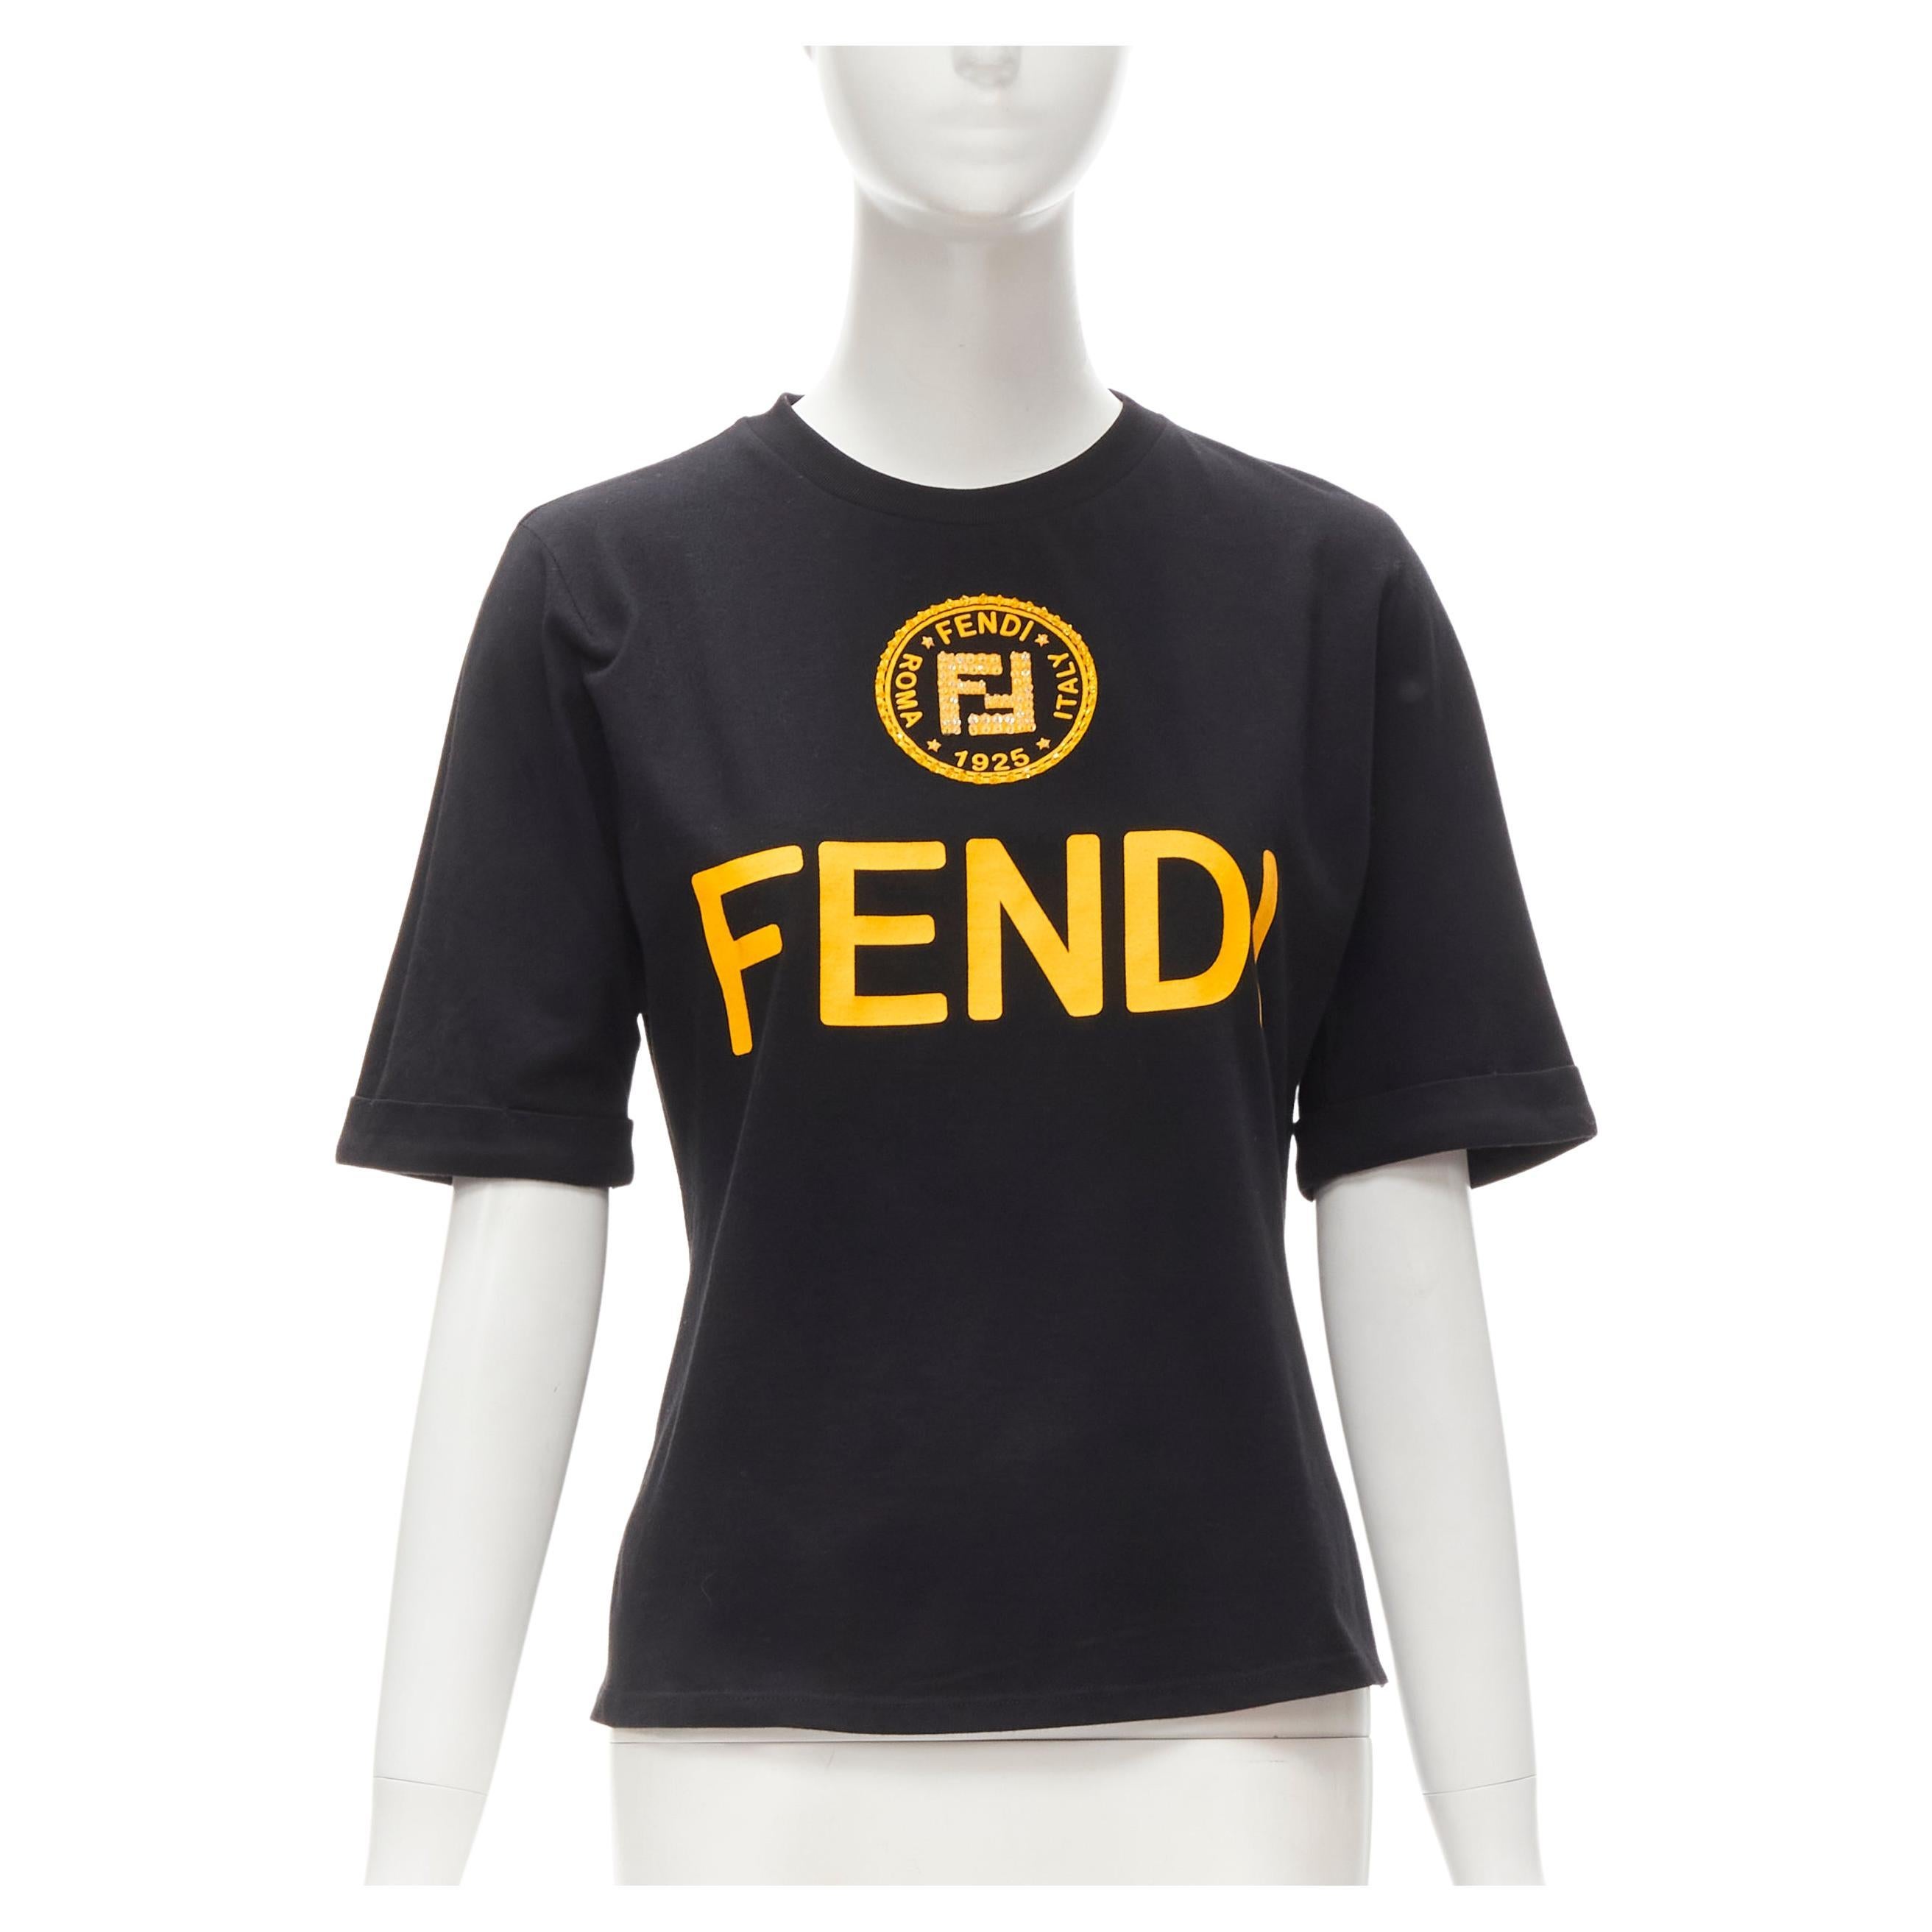 Fendi Tshirt - 4 For Sale on 1stDibs